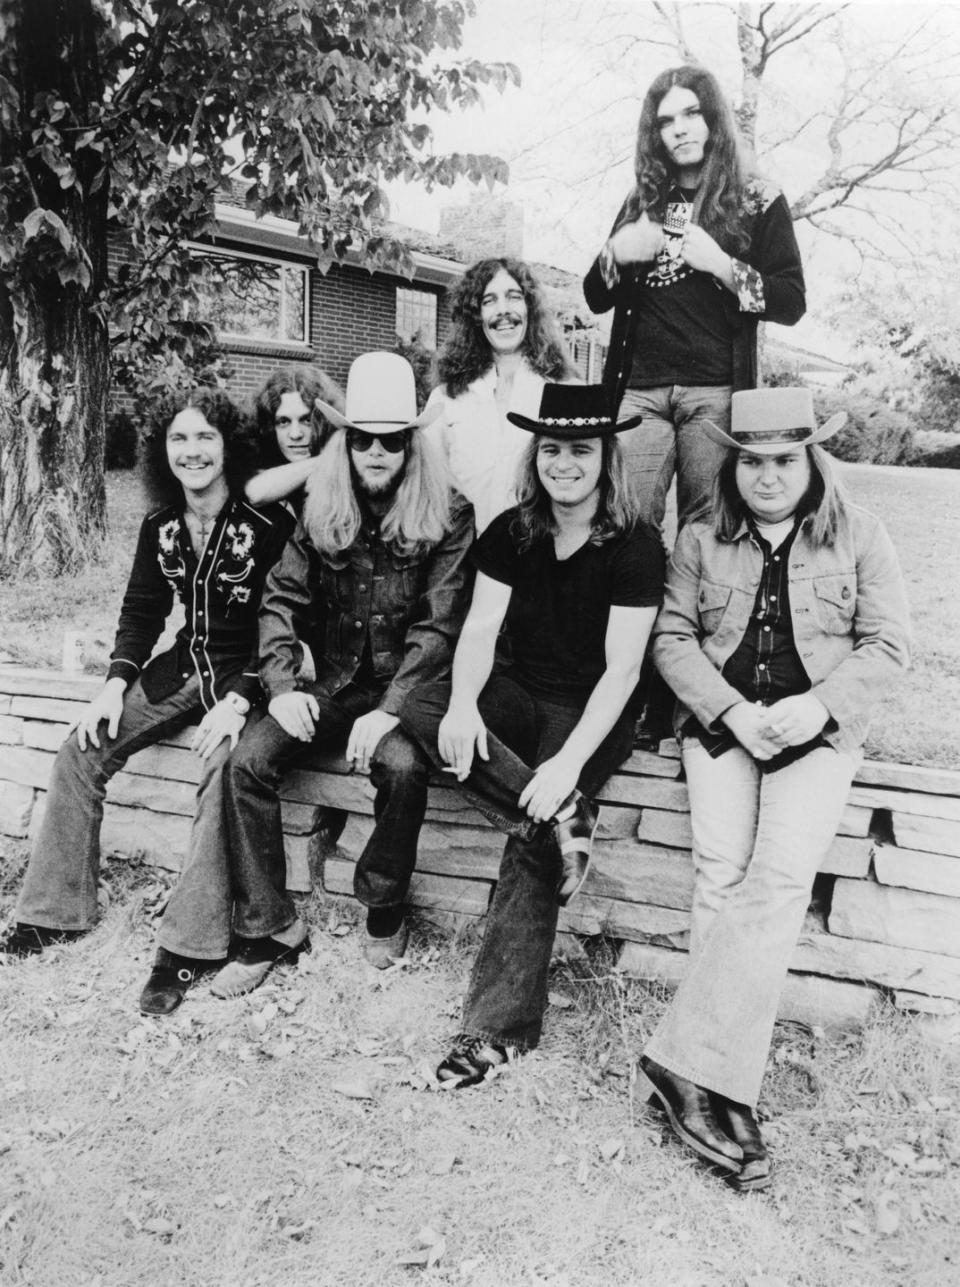 1974: "Sweet Home Alabama"